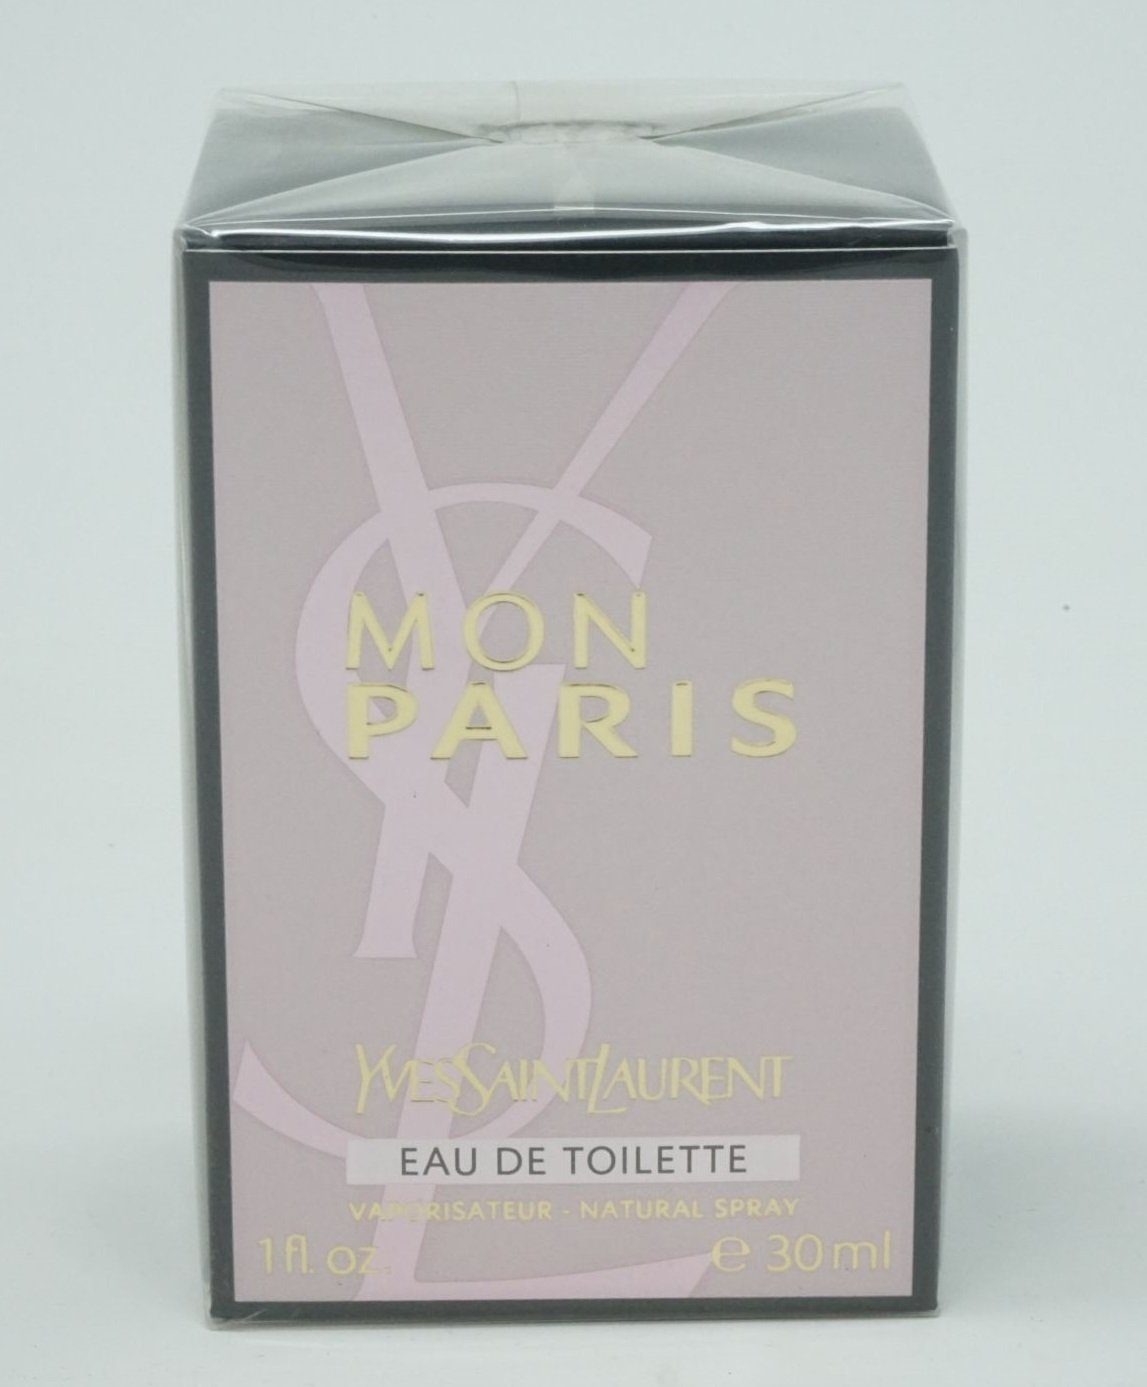 Toilette ml Yves 30 Spray Paris LAURENT Saint Laurent Mon YVES de Eau Toilette de SAINT Eau